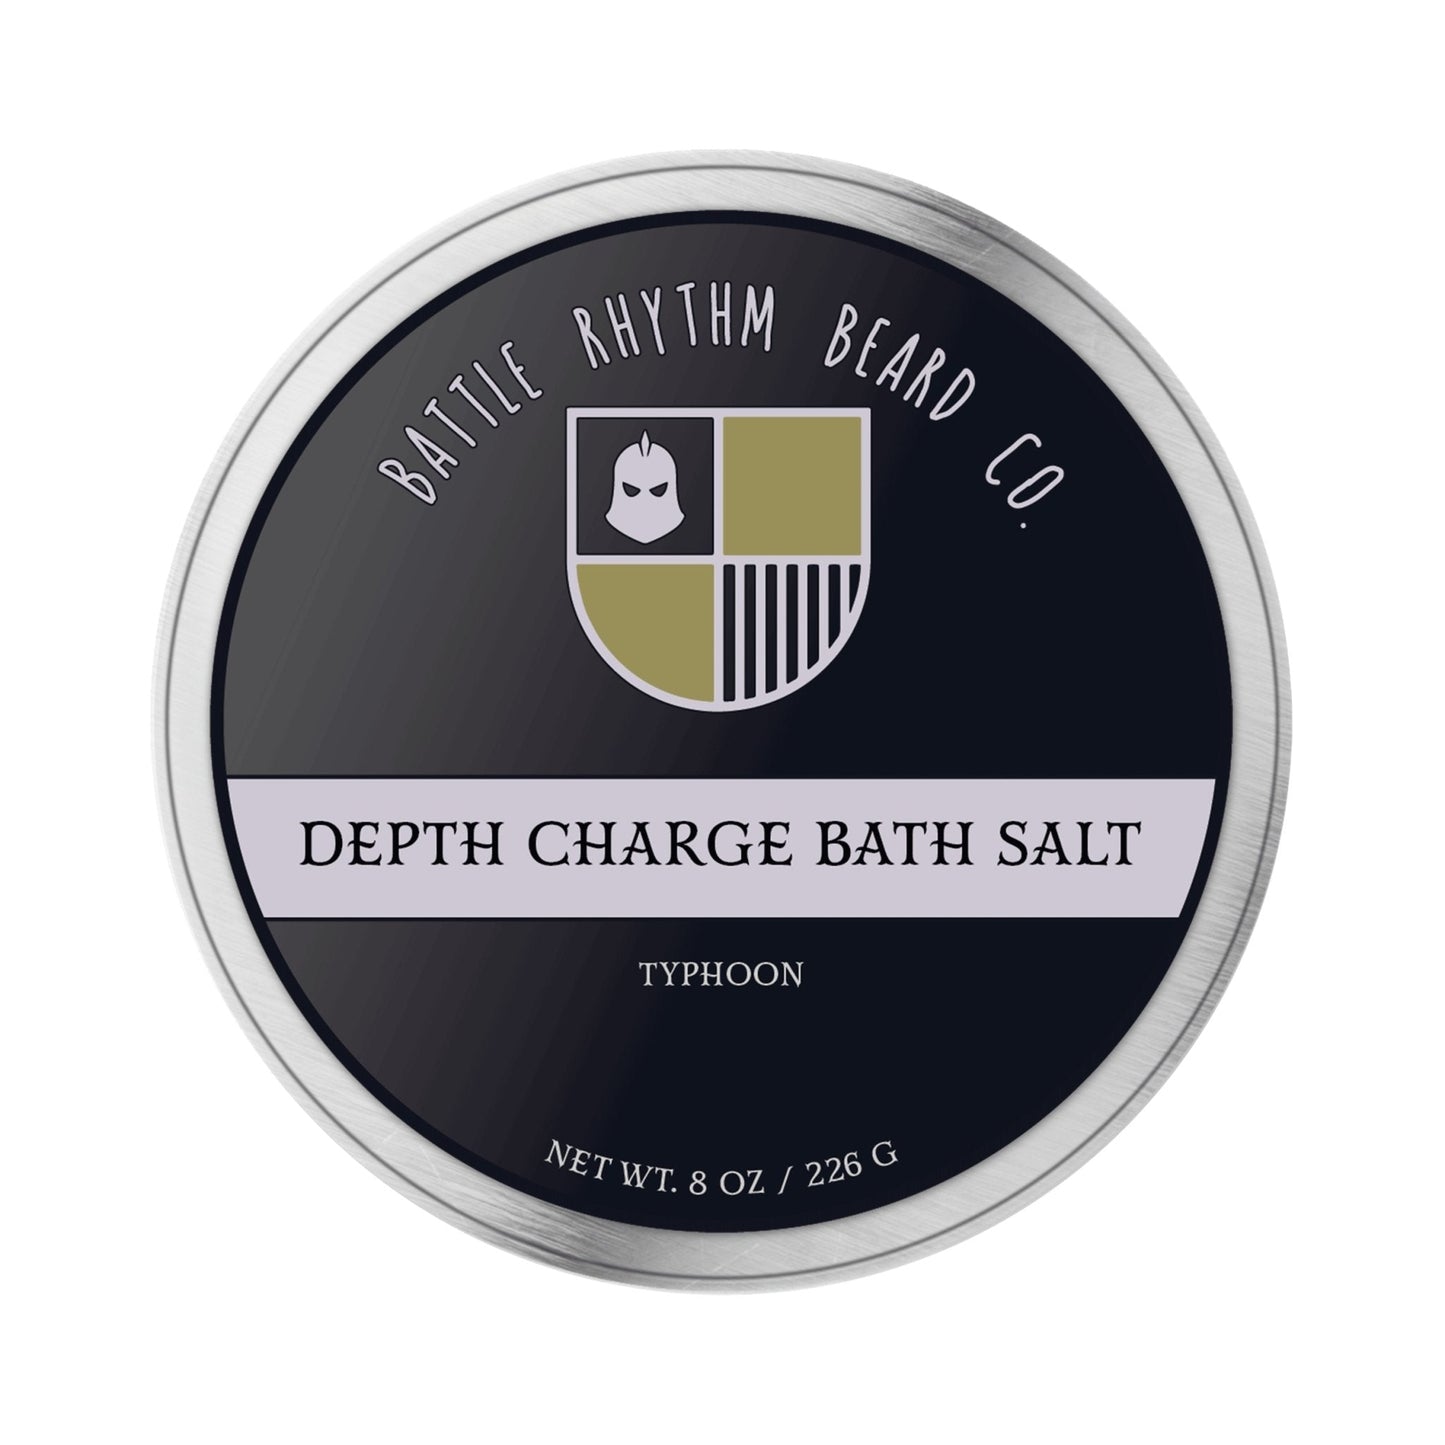 Depth Charge Bath Salt